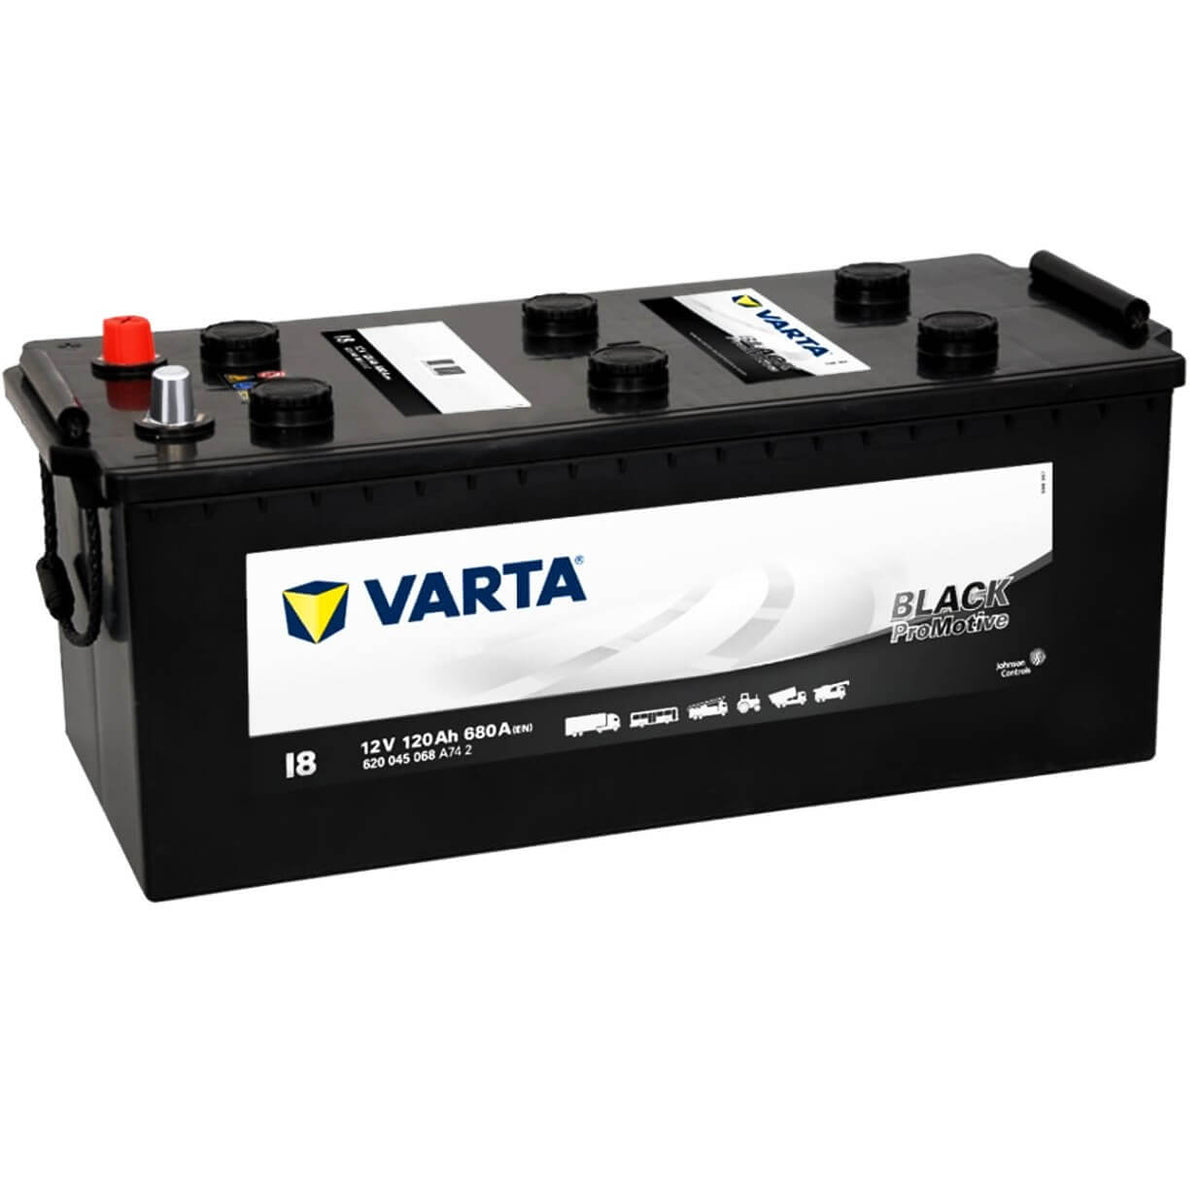 Langzeit Starterbatterie 120Ah 12V, 126,90 €